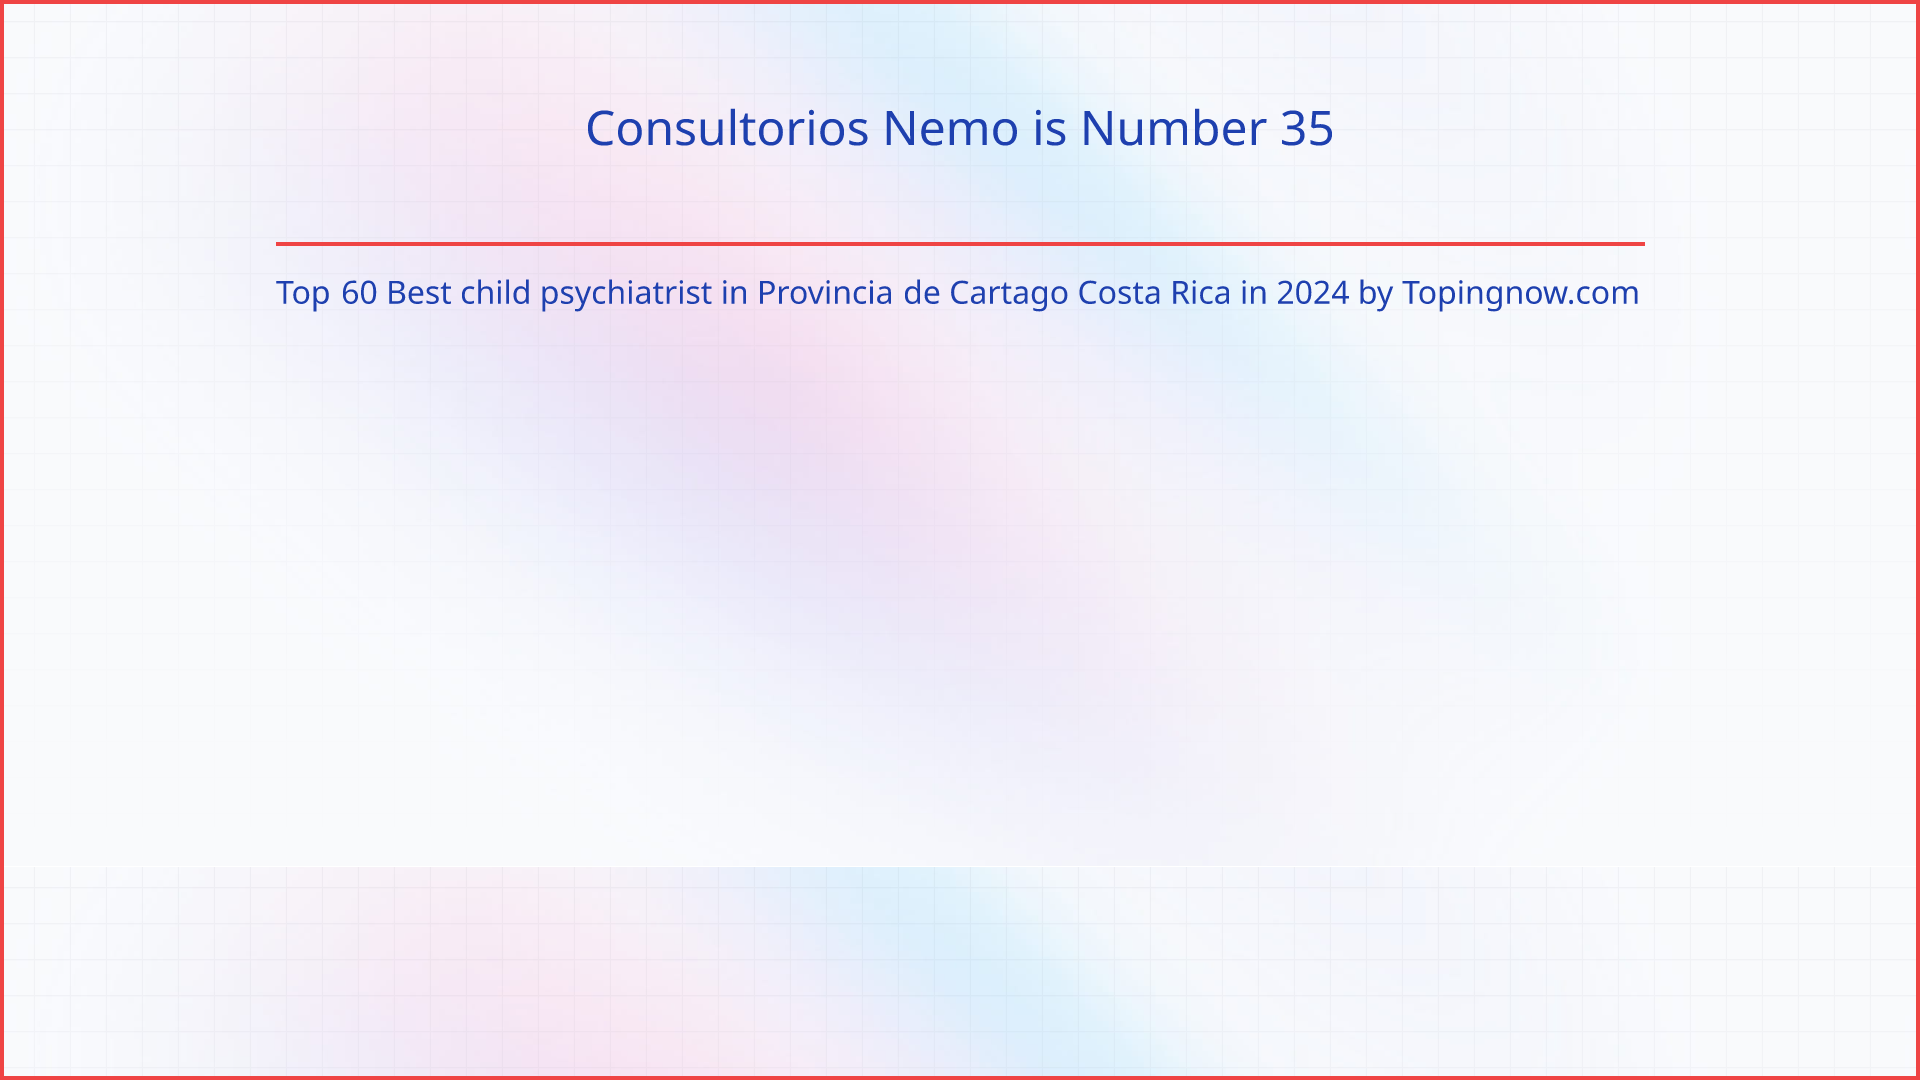 Consultorios Nemo: Top 60 Best child psychiatrist in Provincia de Cartago Costa Rica in 2024